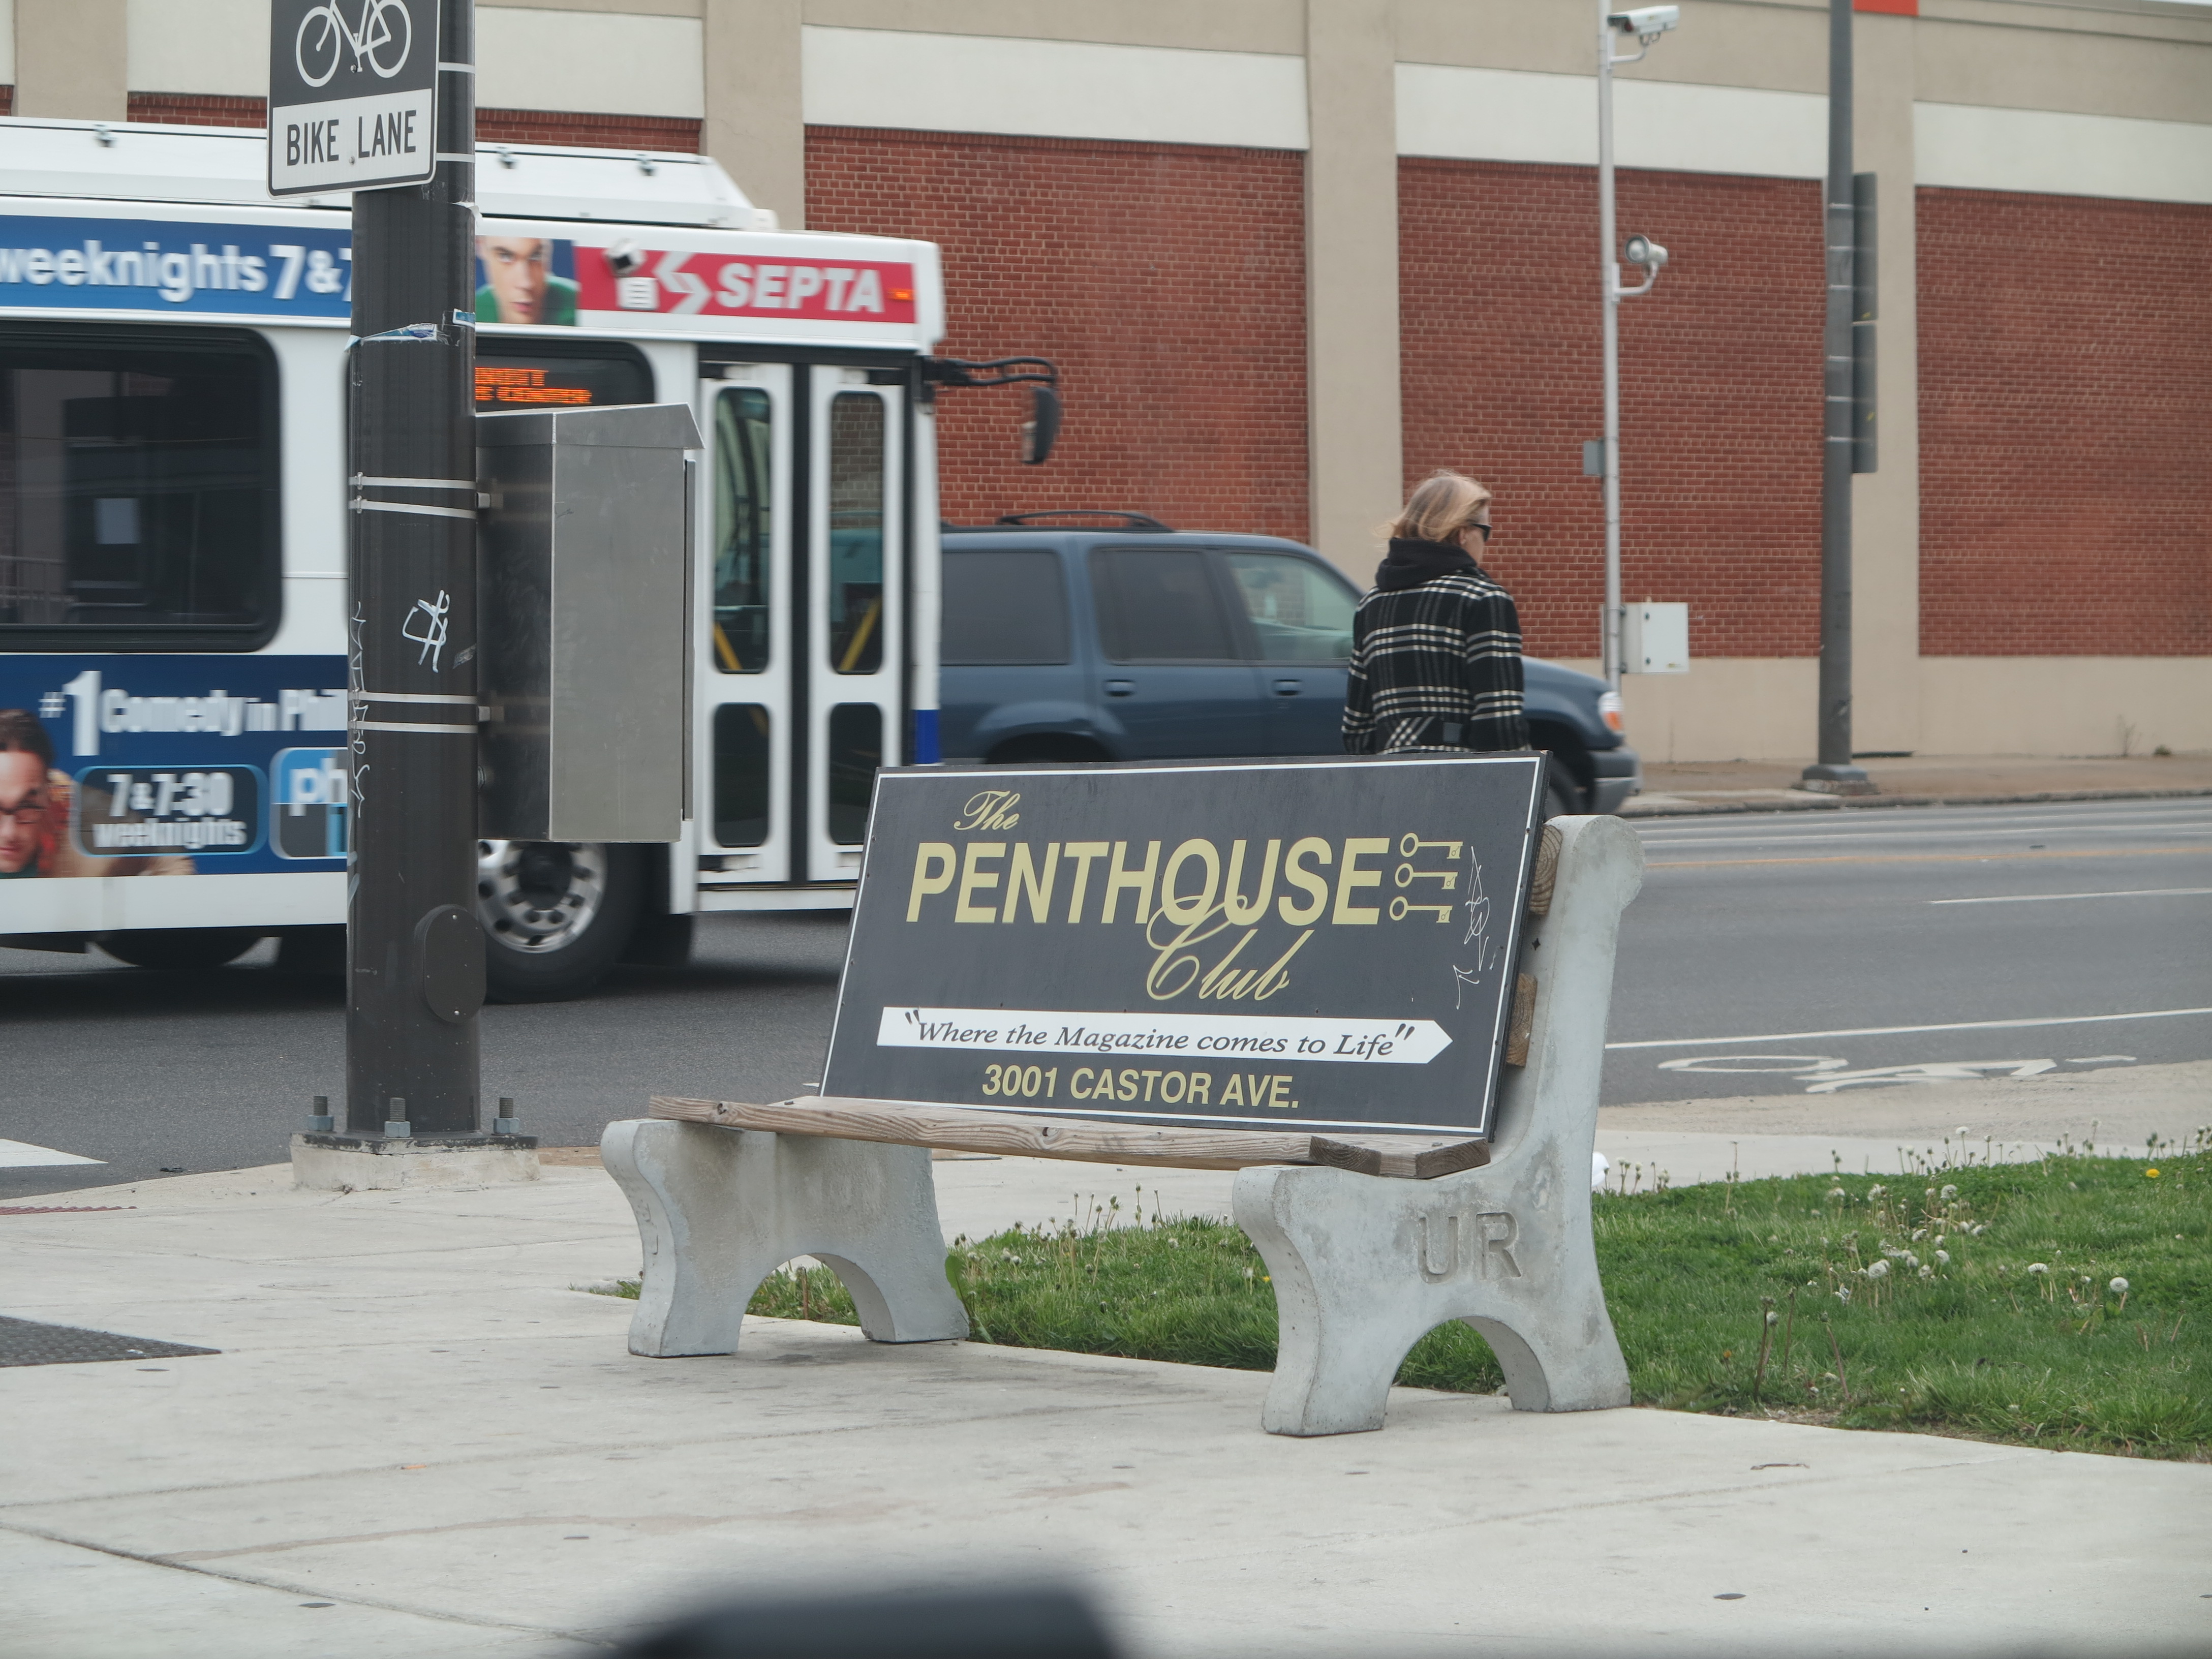 Penthouse Club, Aramingo and Castor, May 2013.